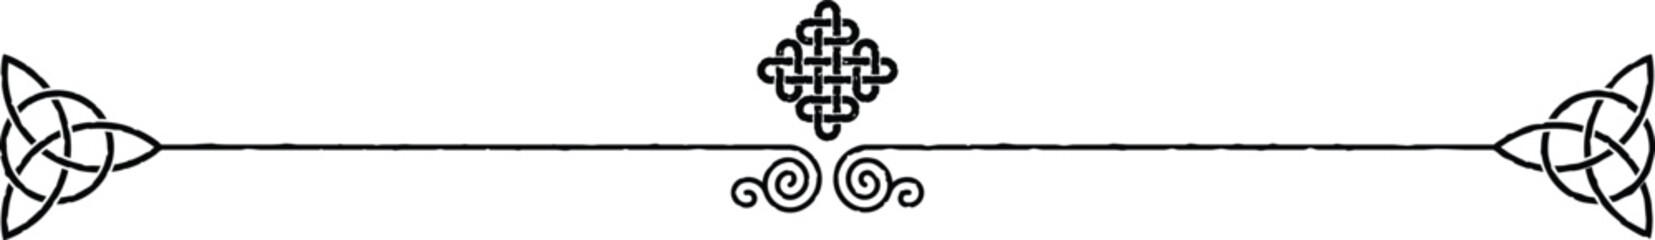 Elegant Celtic Header Graphic - Spiral, Triquetra, Diamond Knot